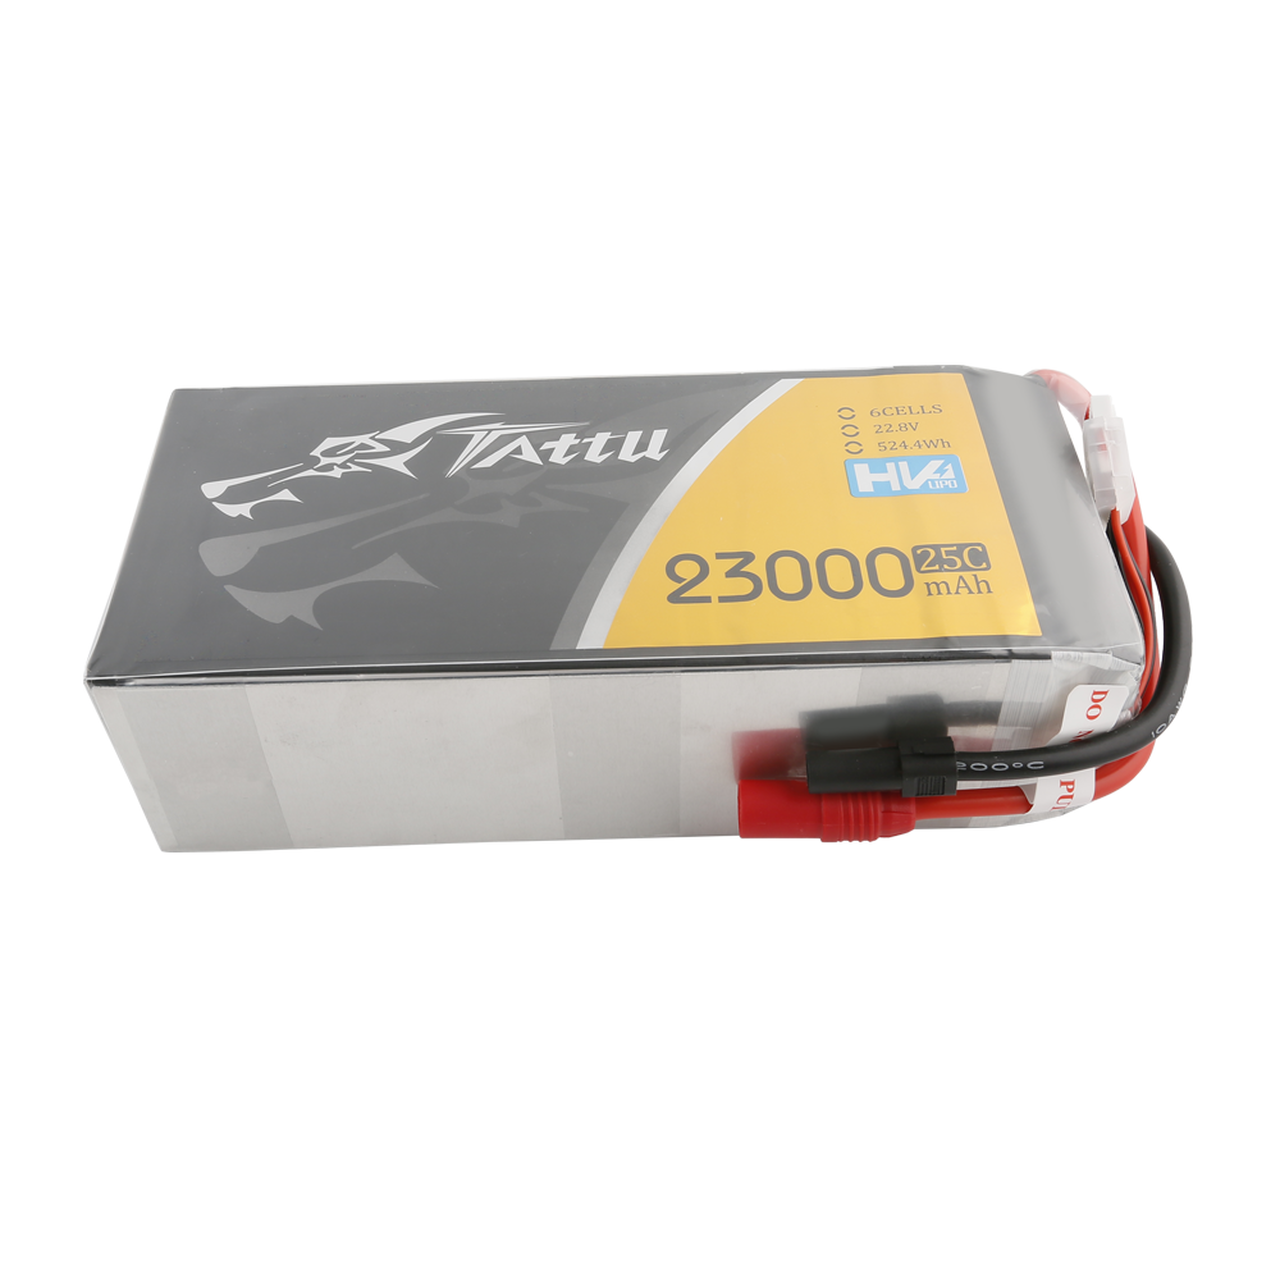 Tattu 22.8V 25C 6S 23000mAh Lipo Battery with AS150+XT150 Plug for UAV